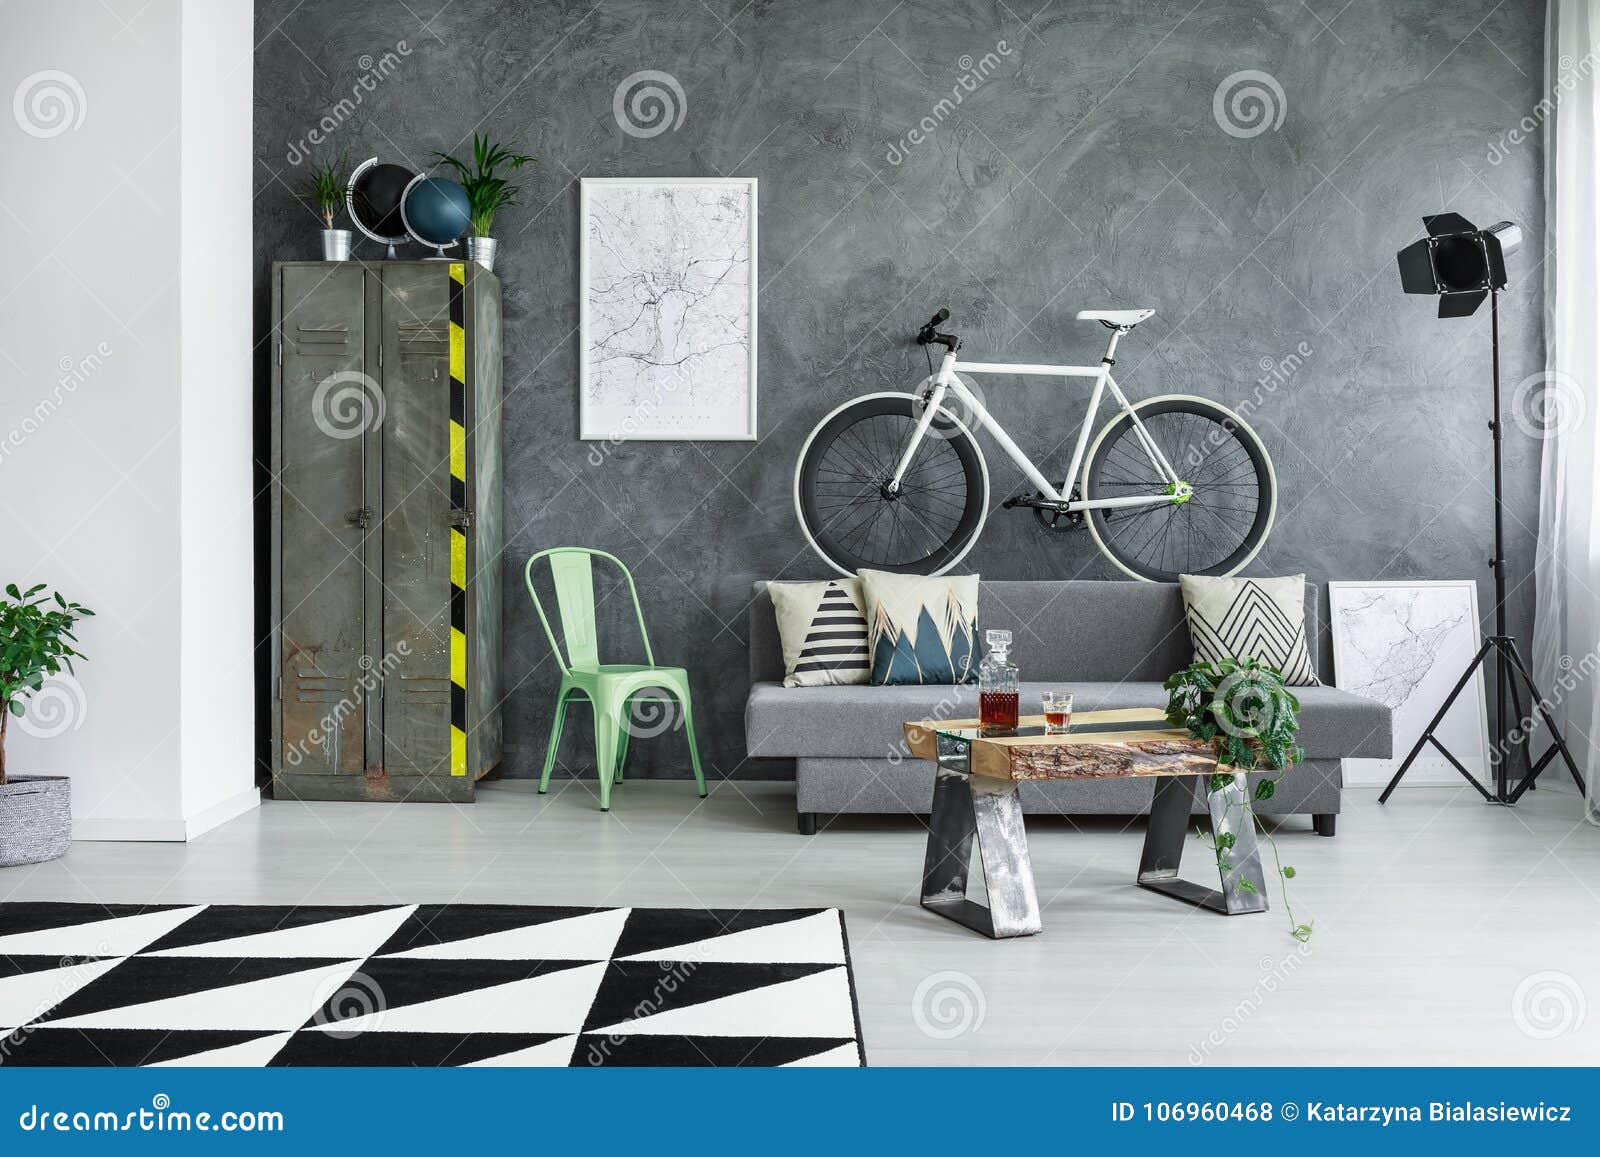 monochromatic living room with bike